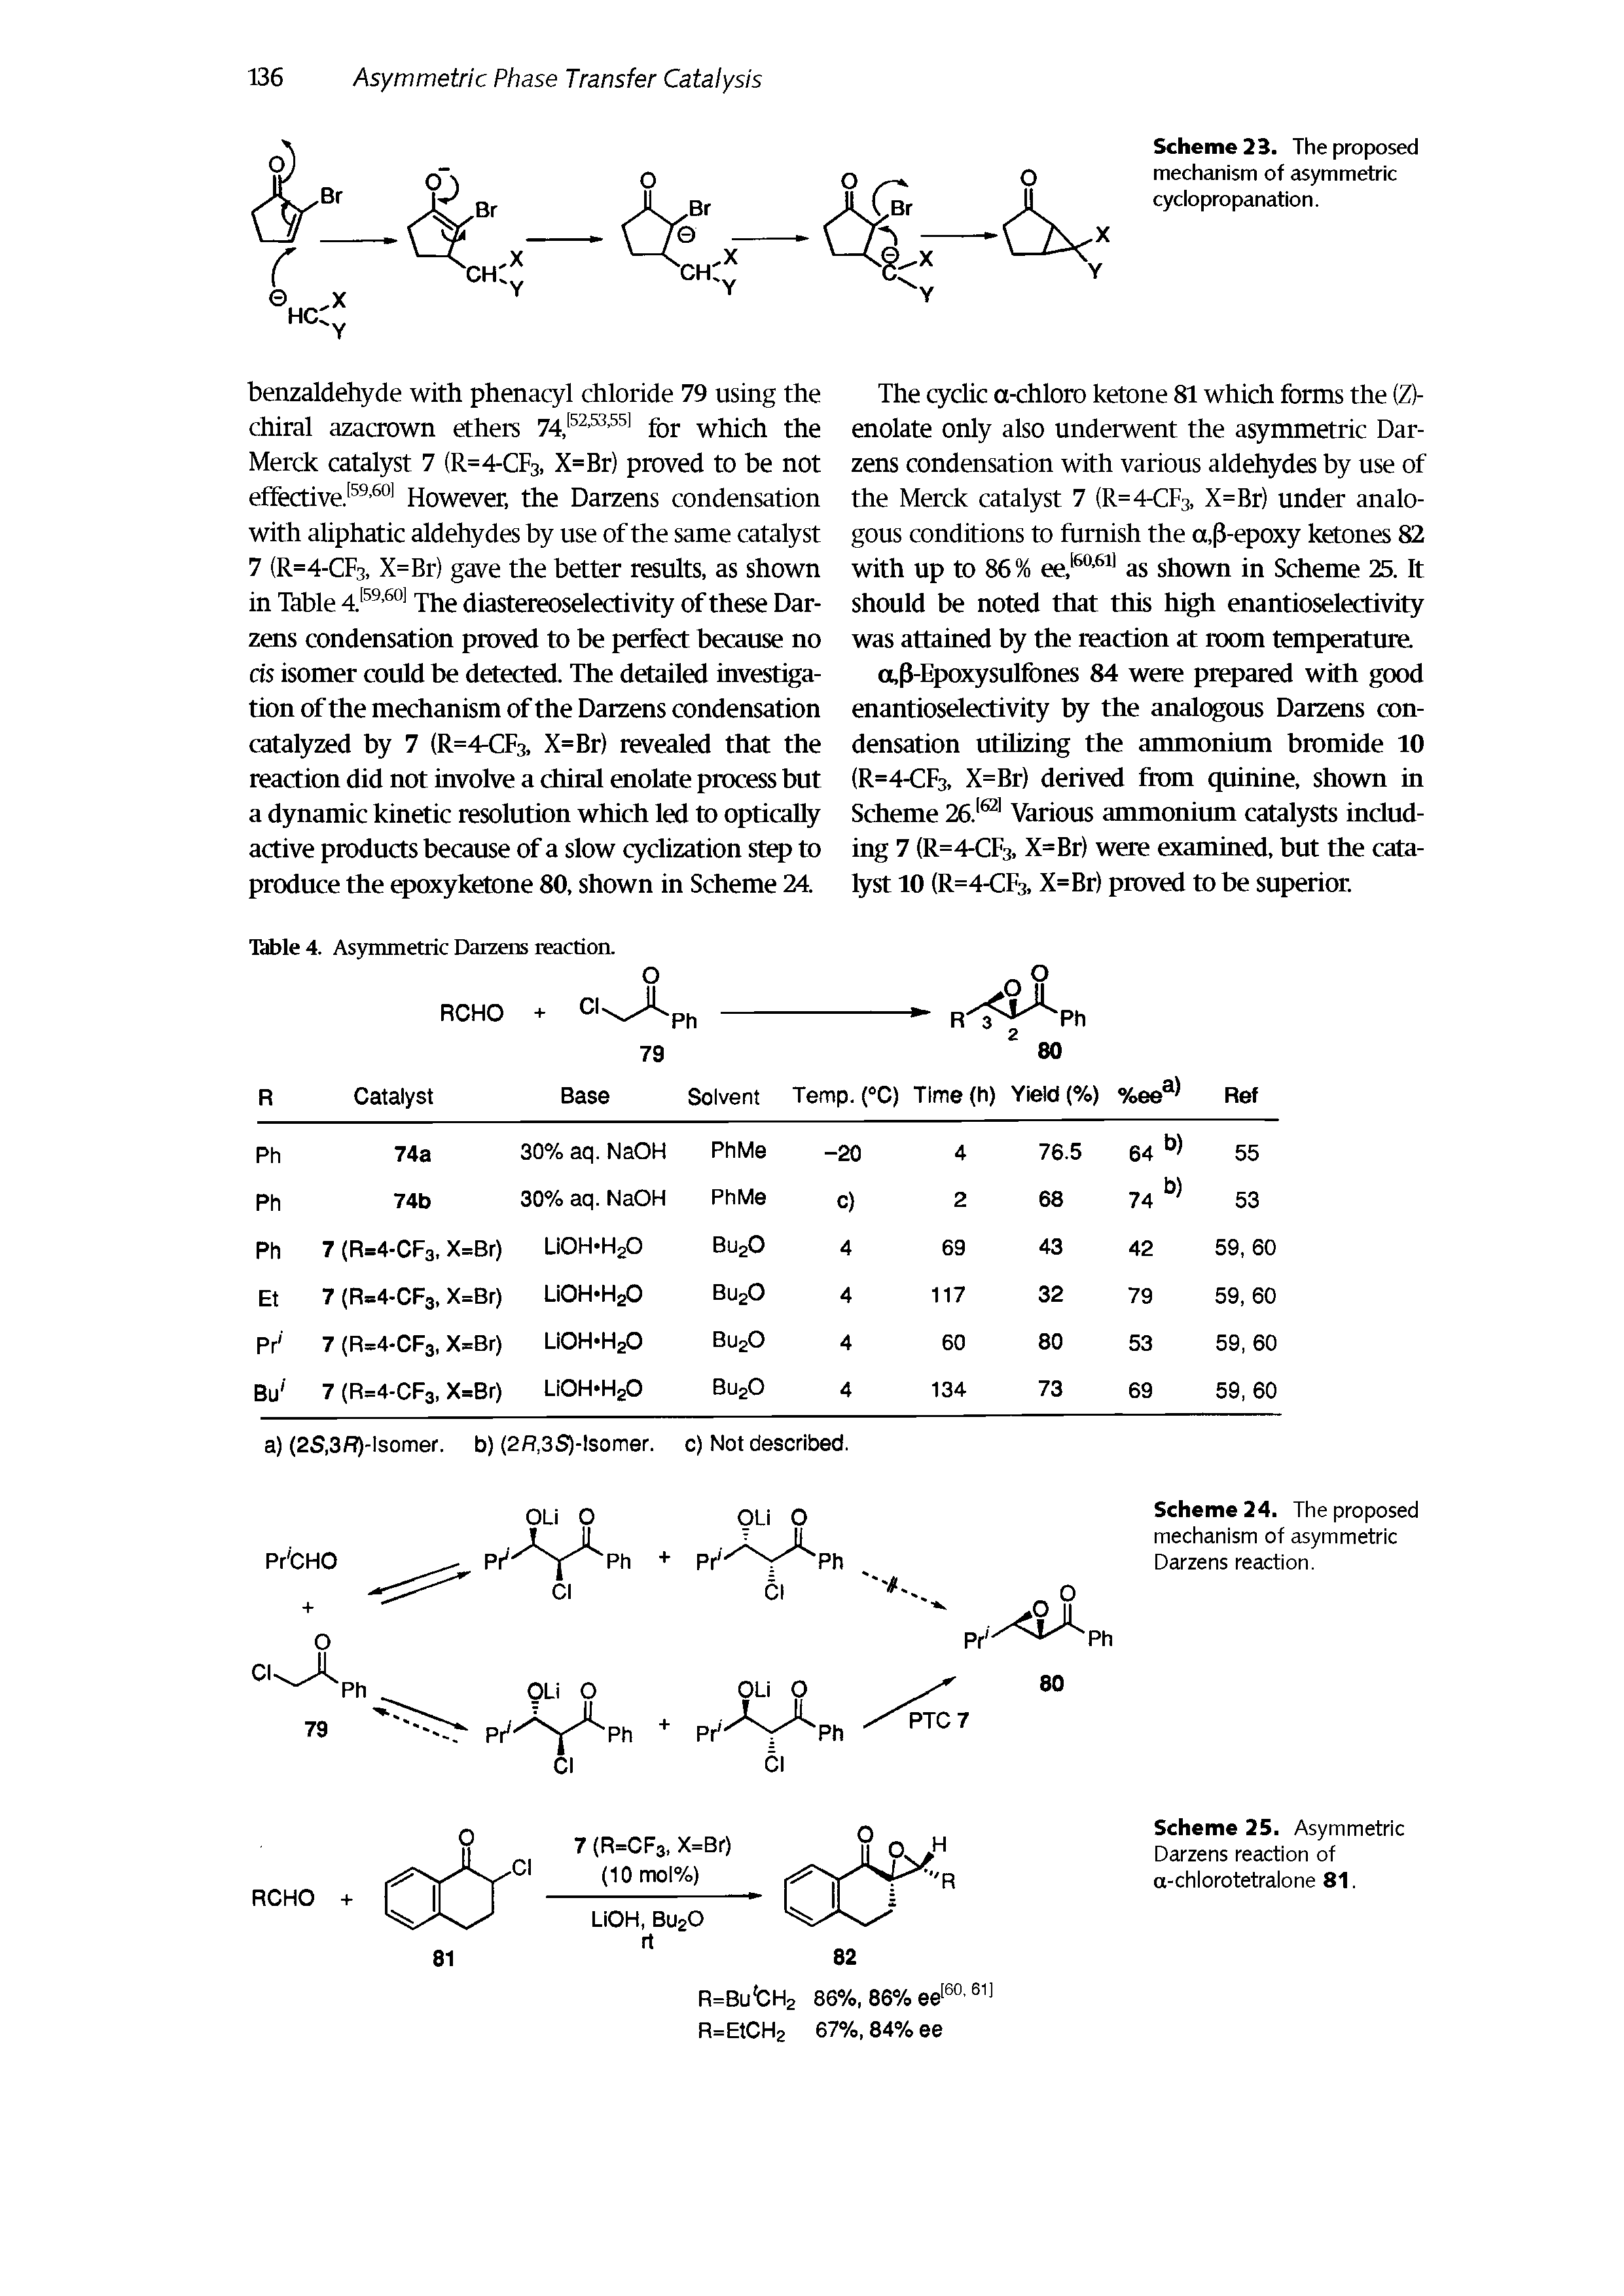 Scheme 24. The proposed mechanism of asymmetric Darzens reaction.